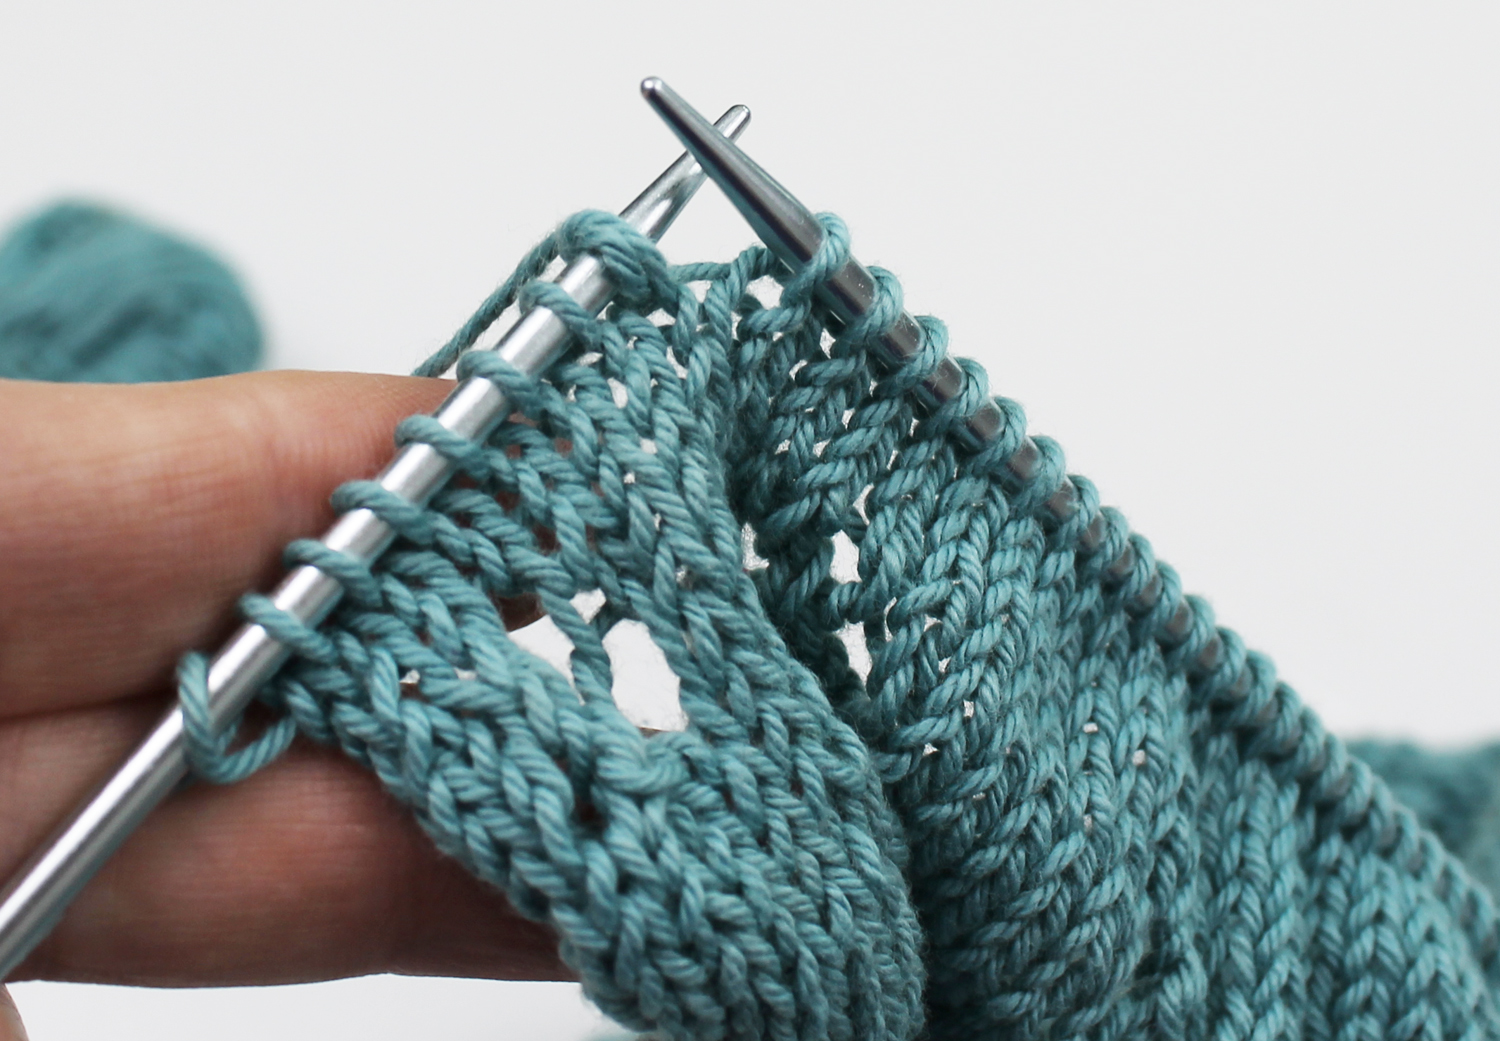 Tinking knit stitches